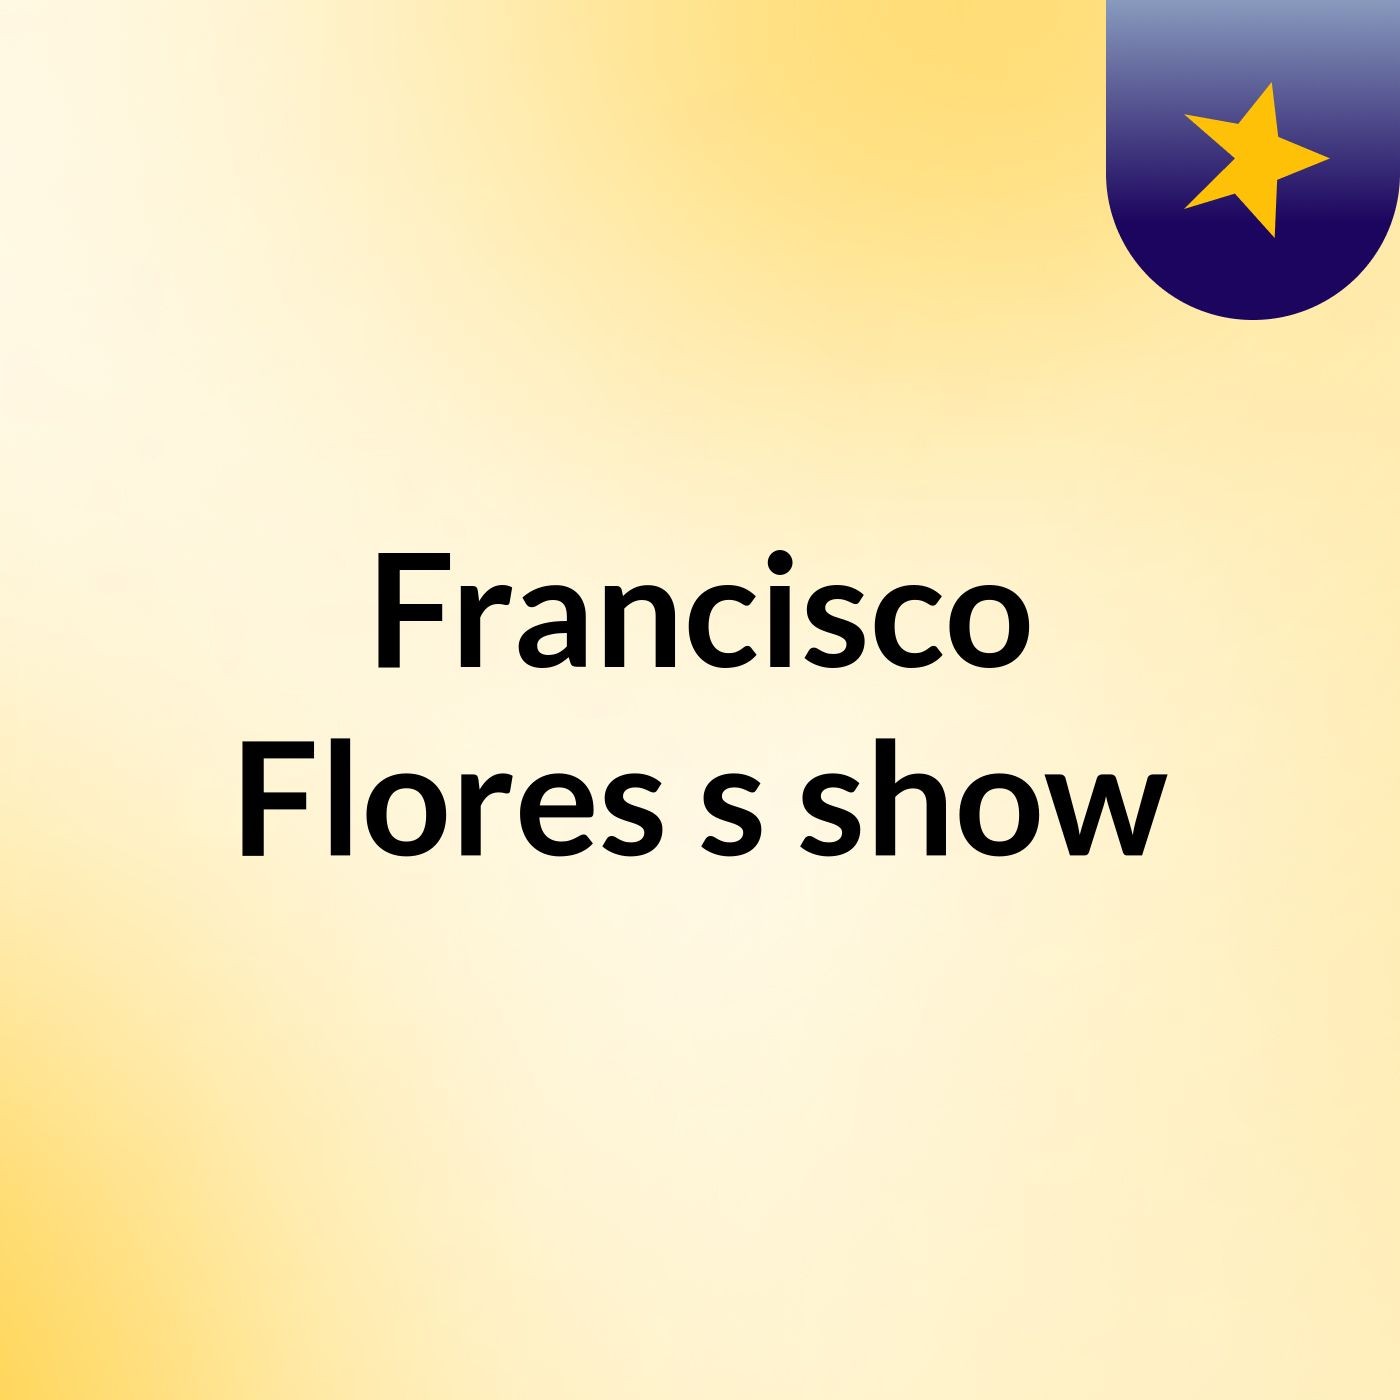 Francisco Flores's show